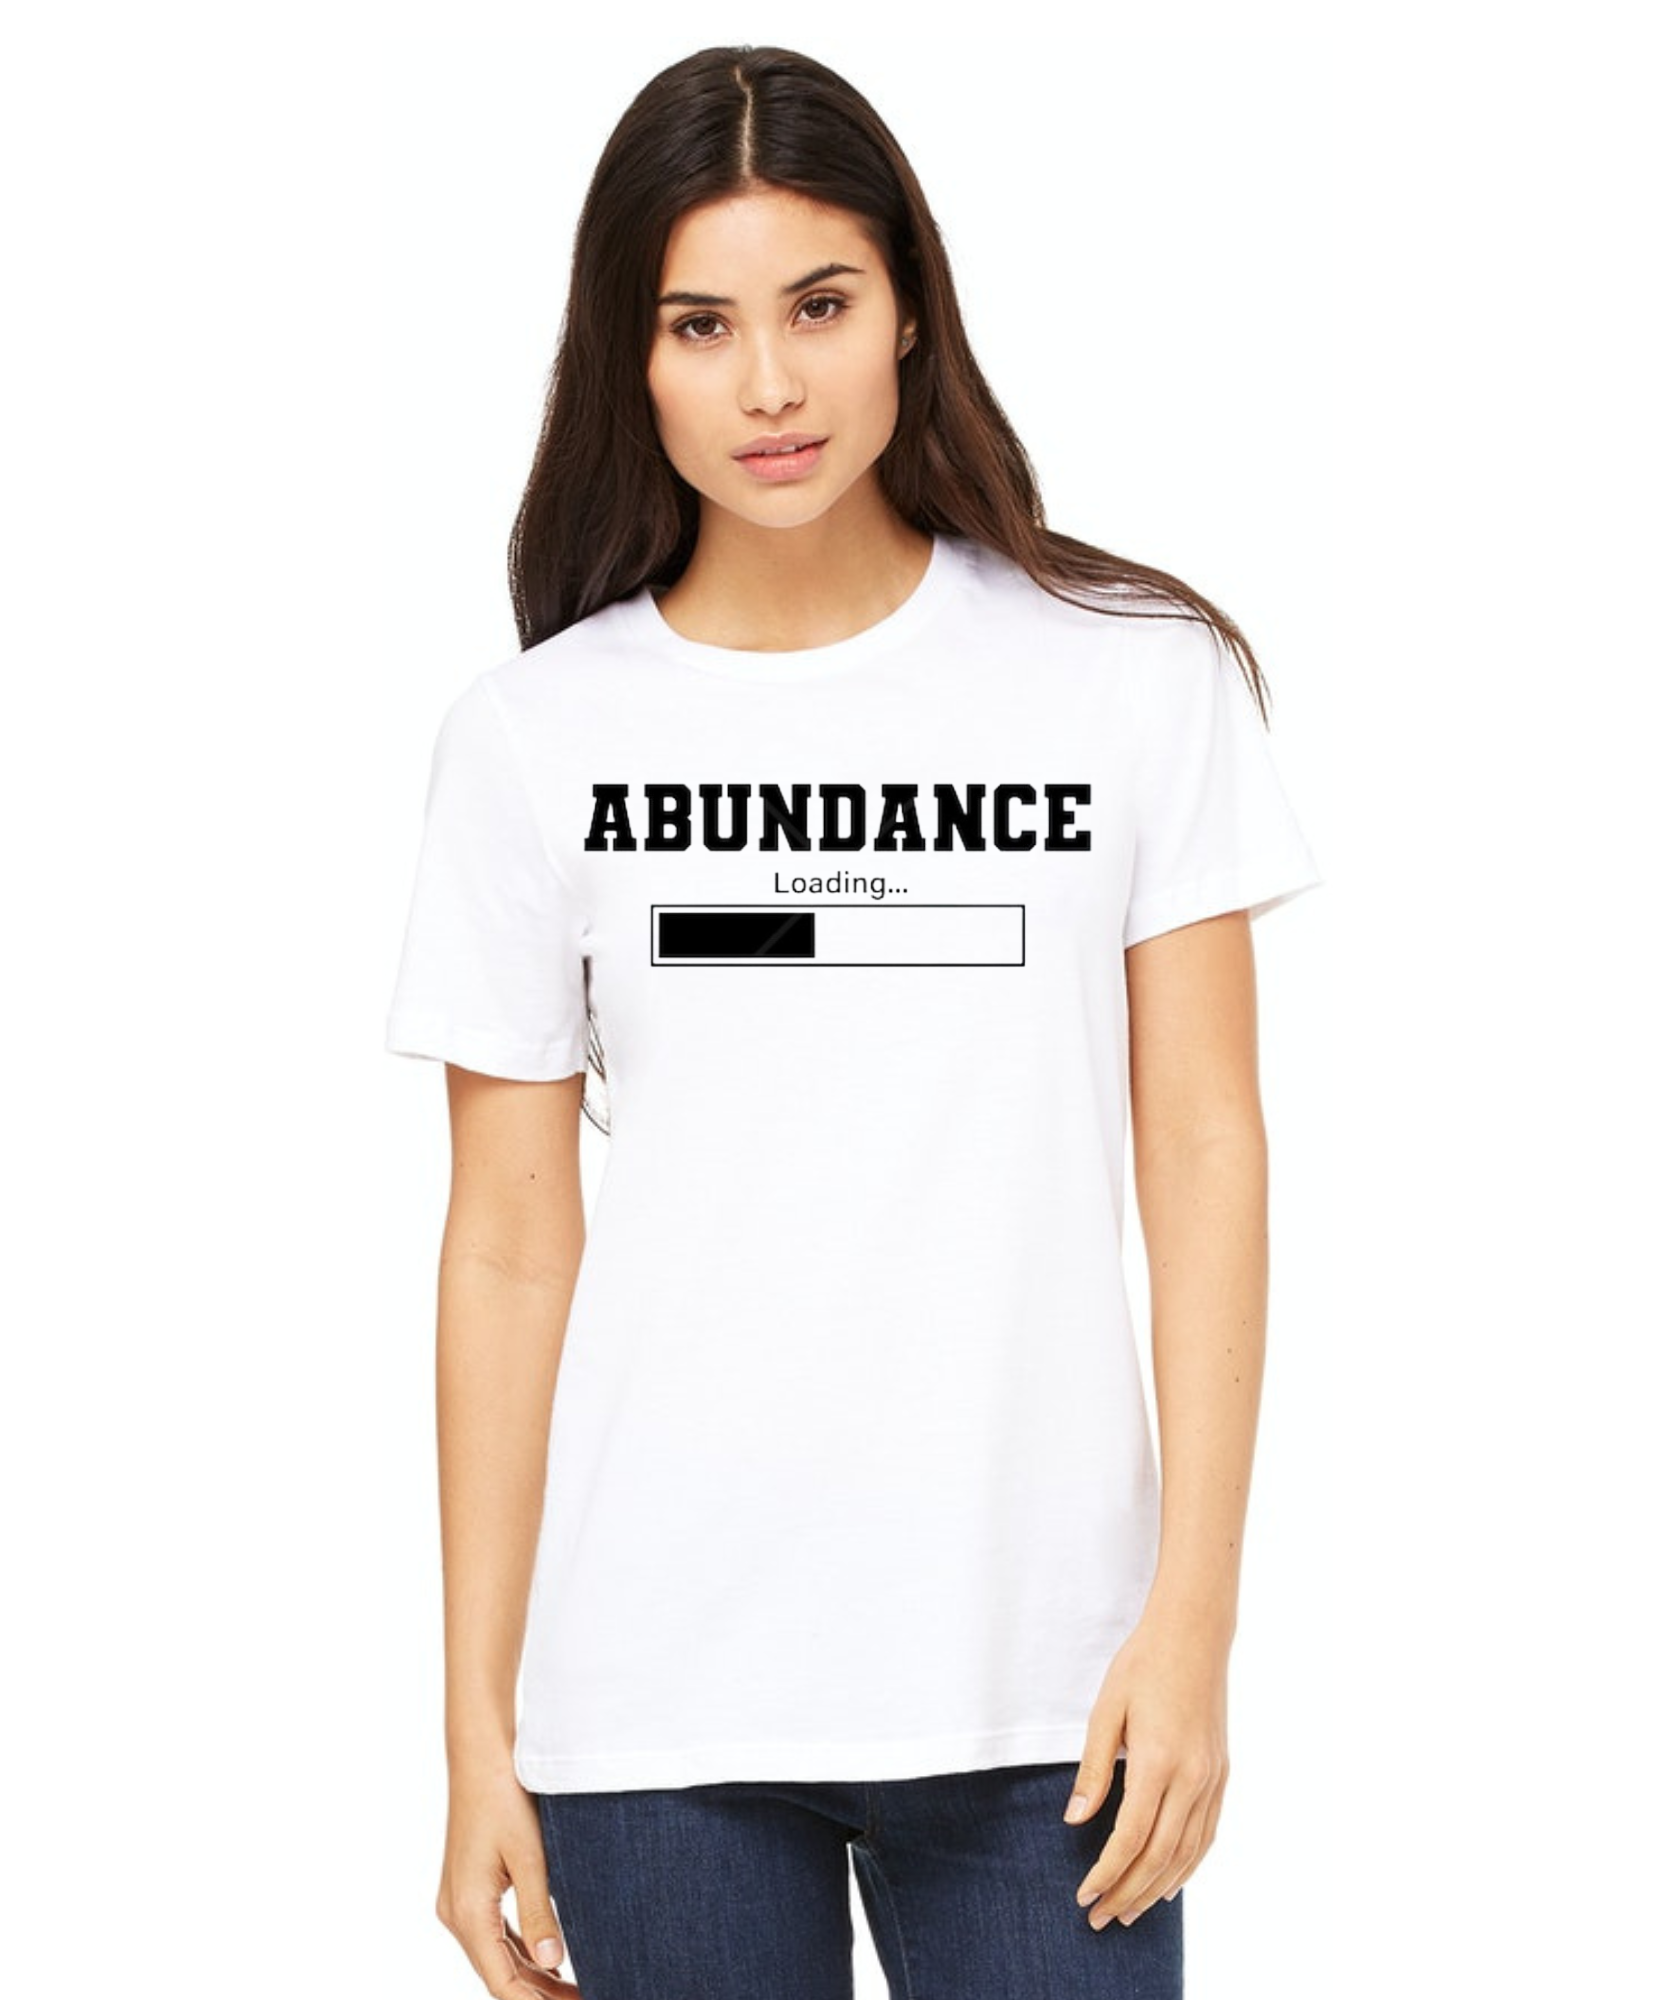 Abundance Loading